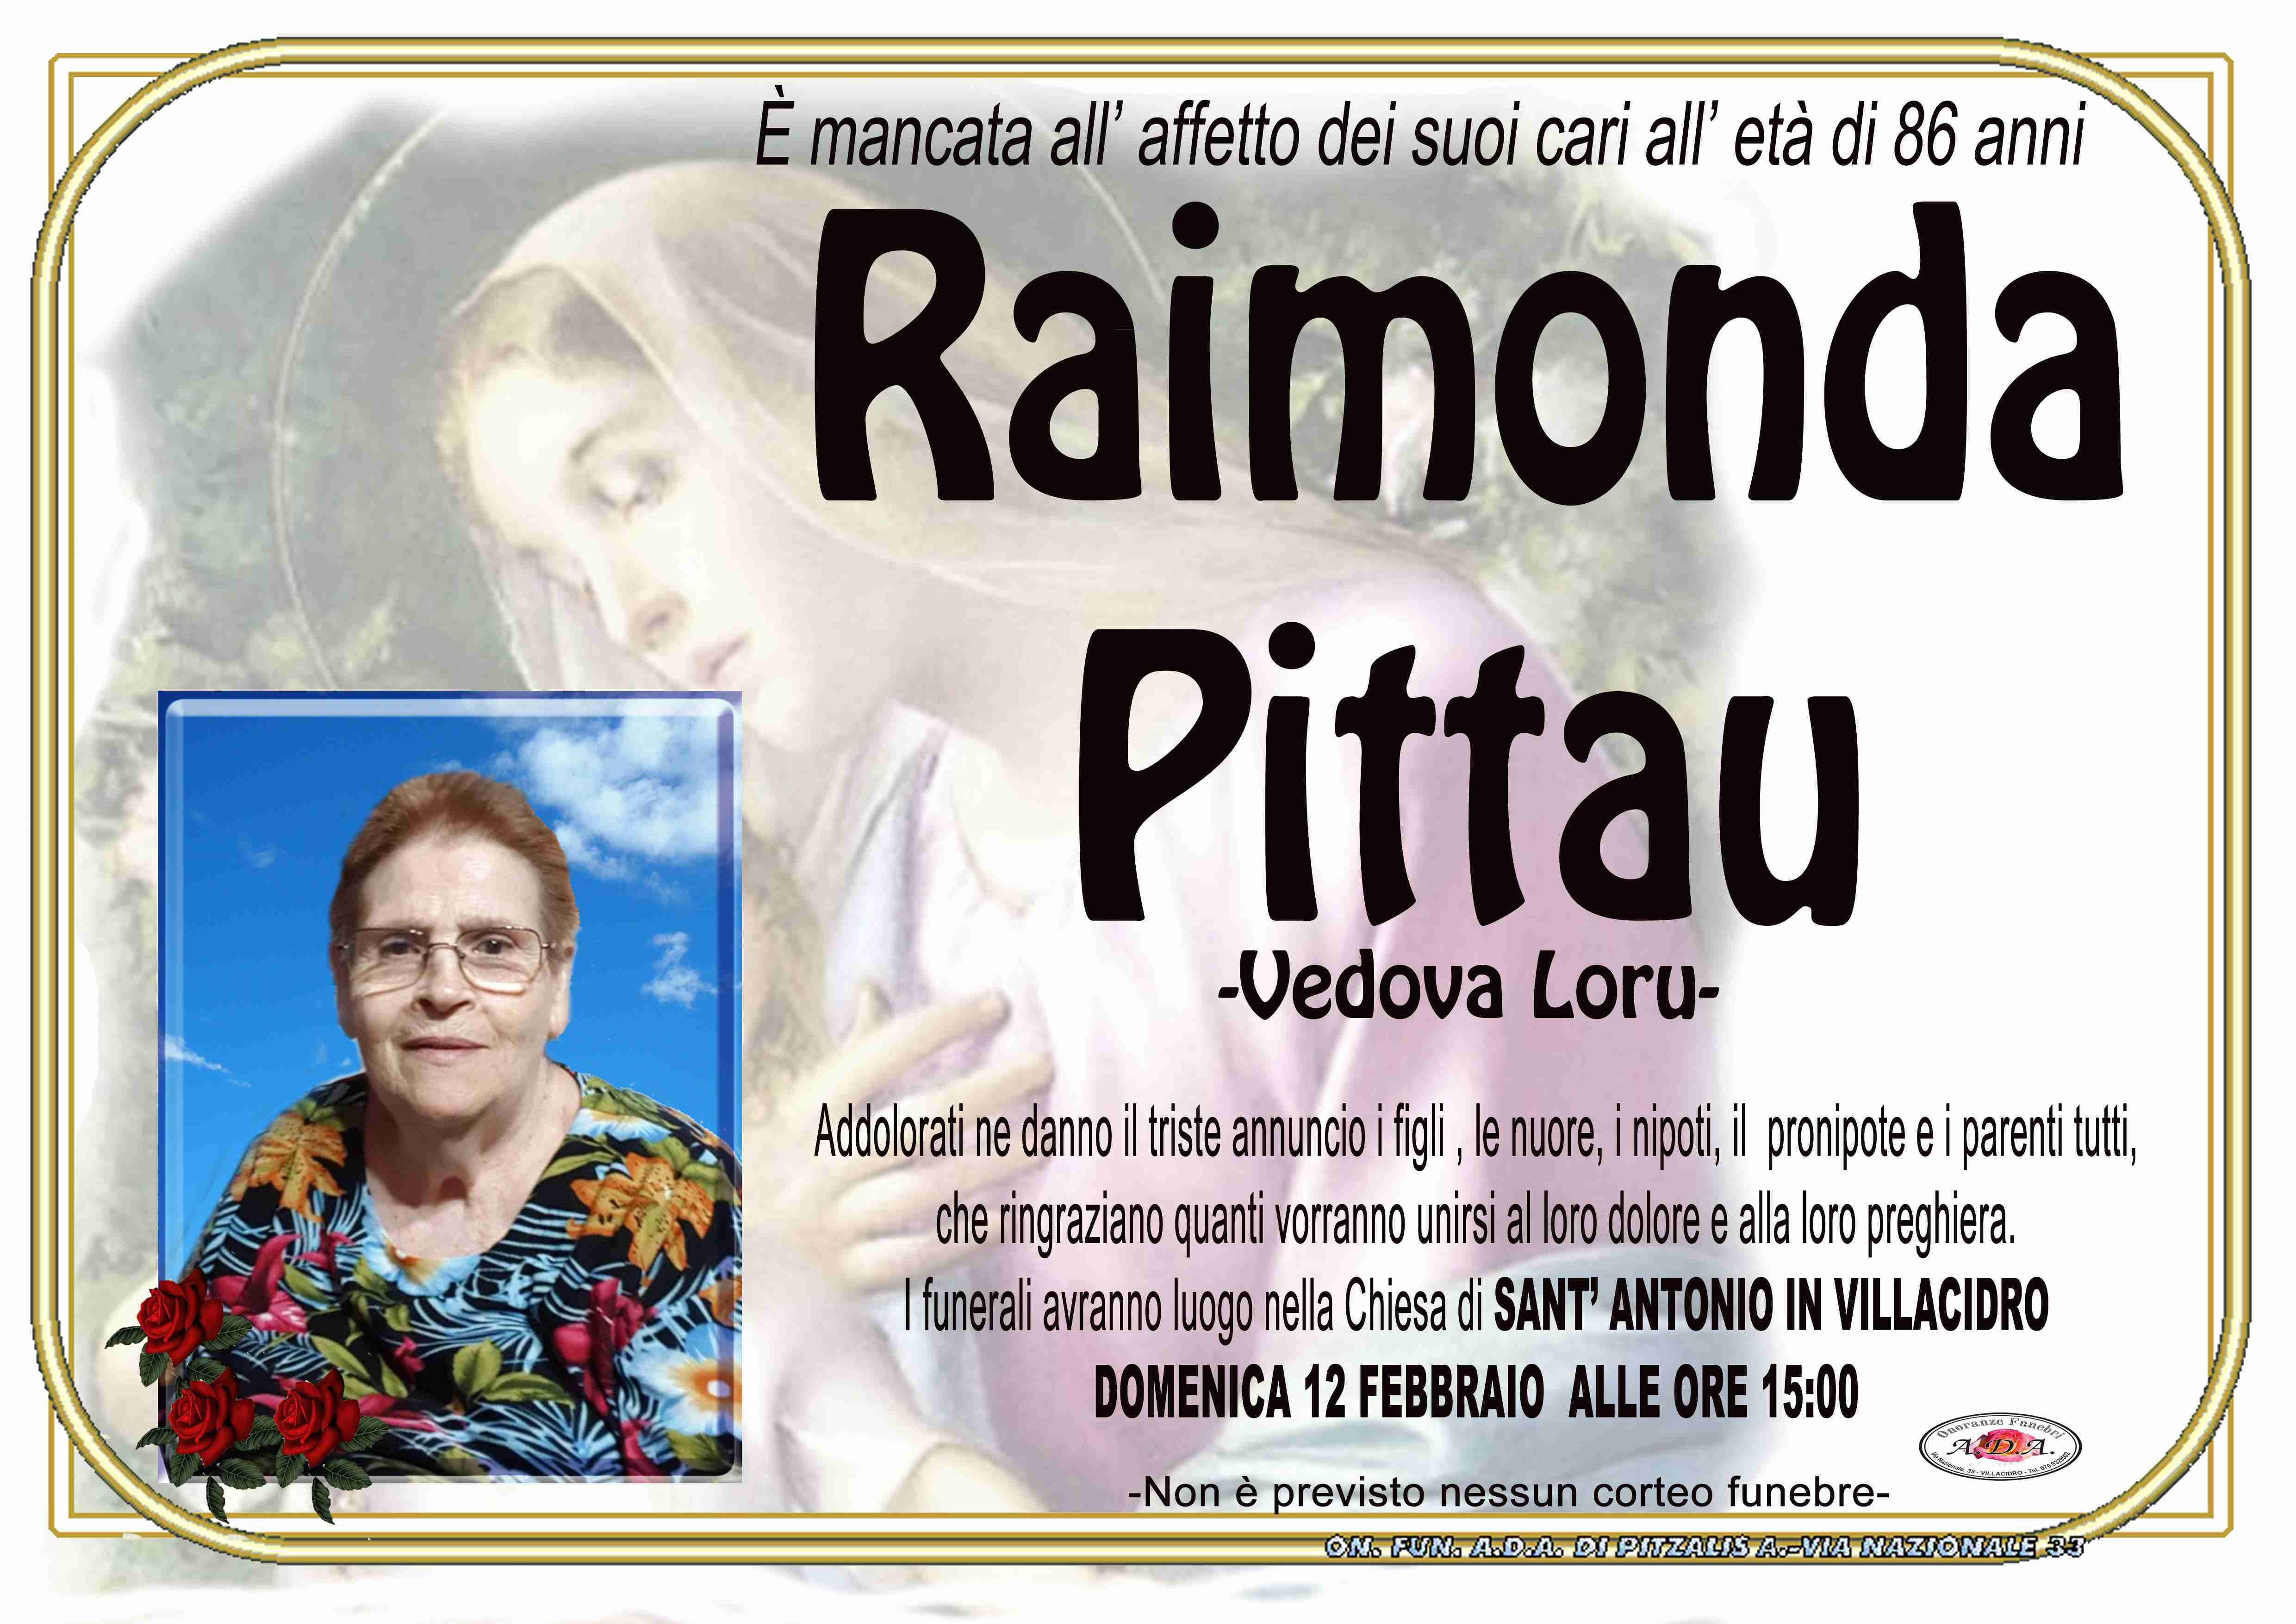 Raimonda Pittau